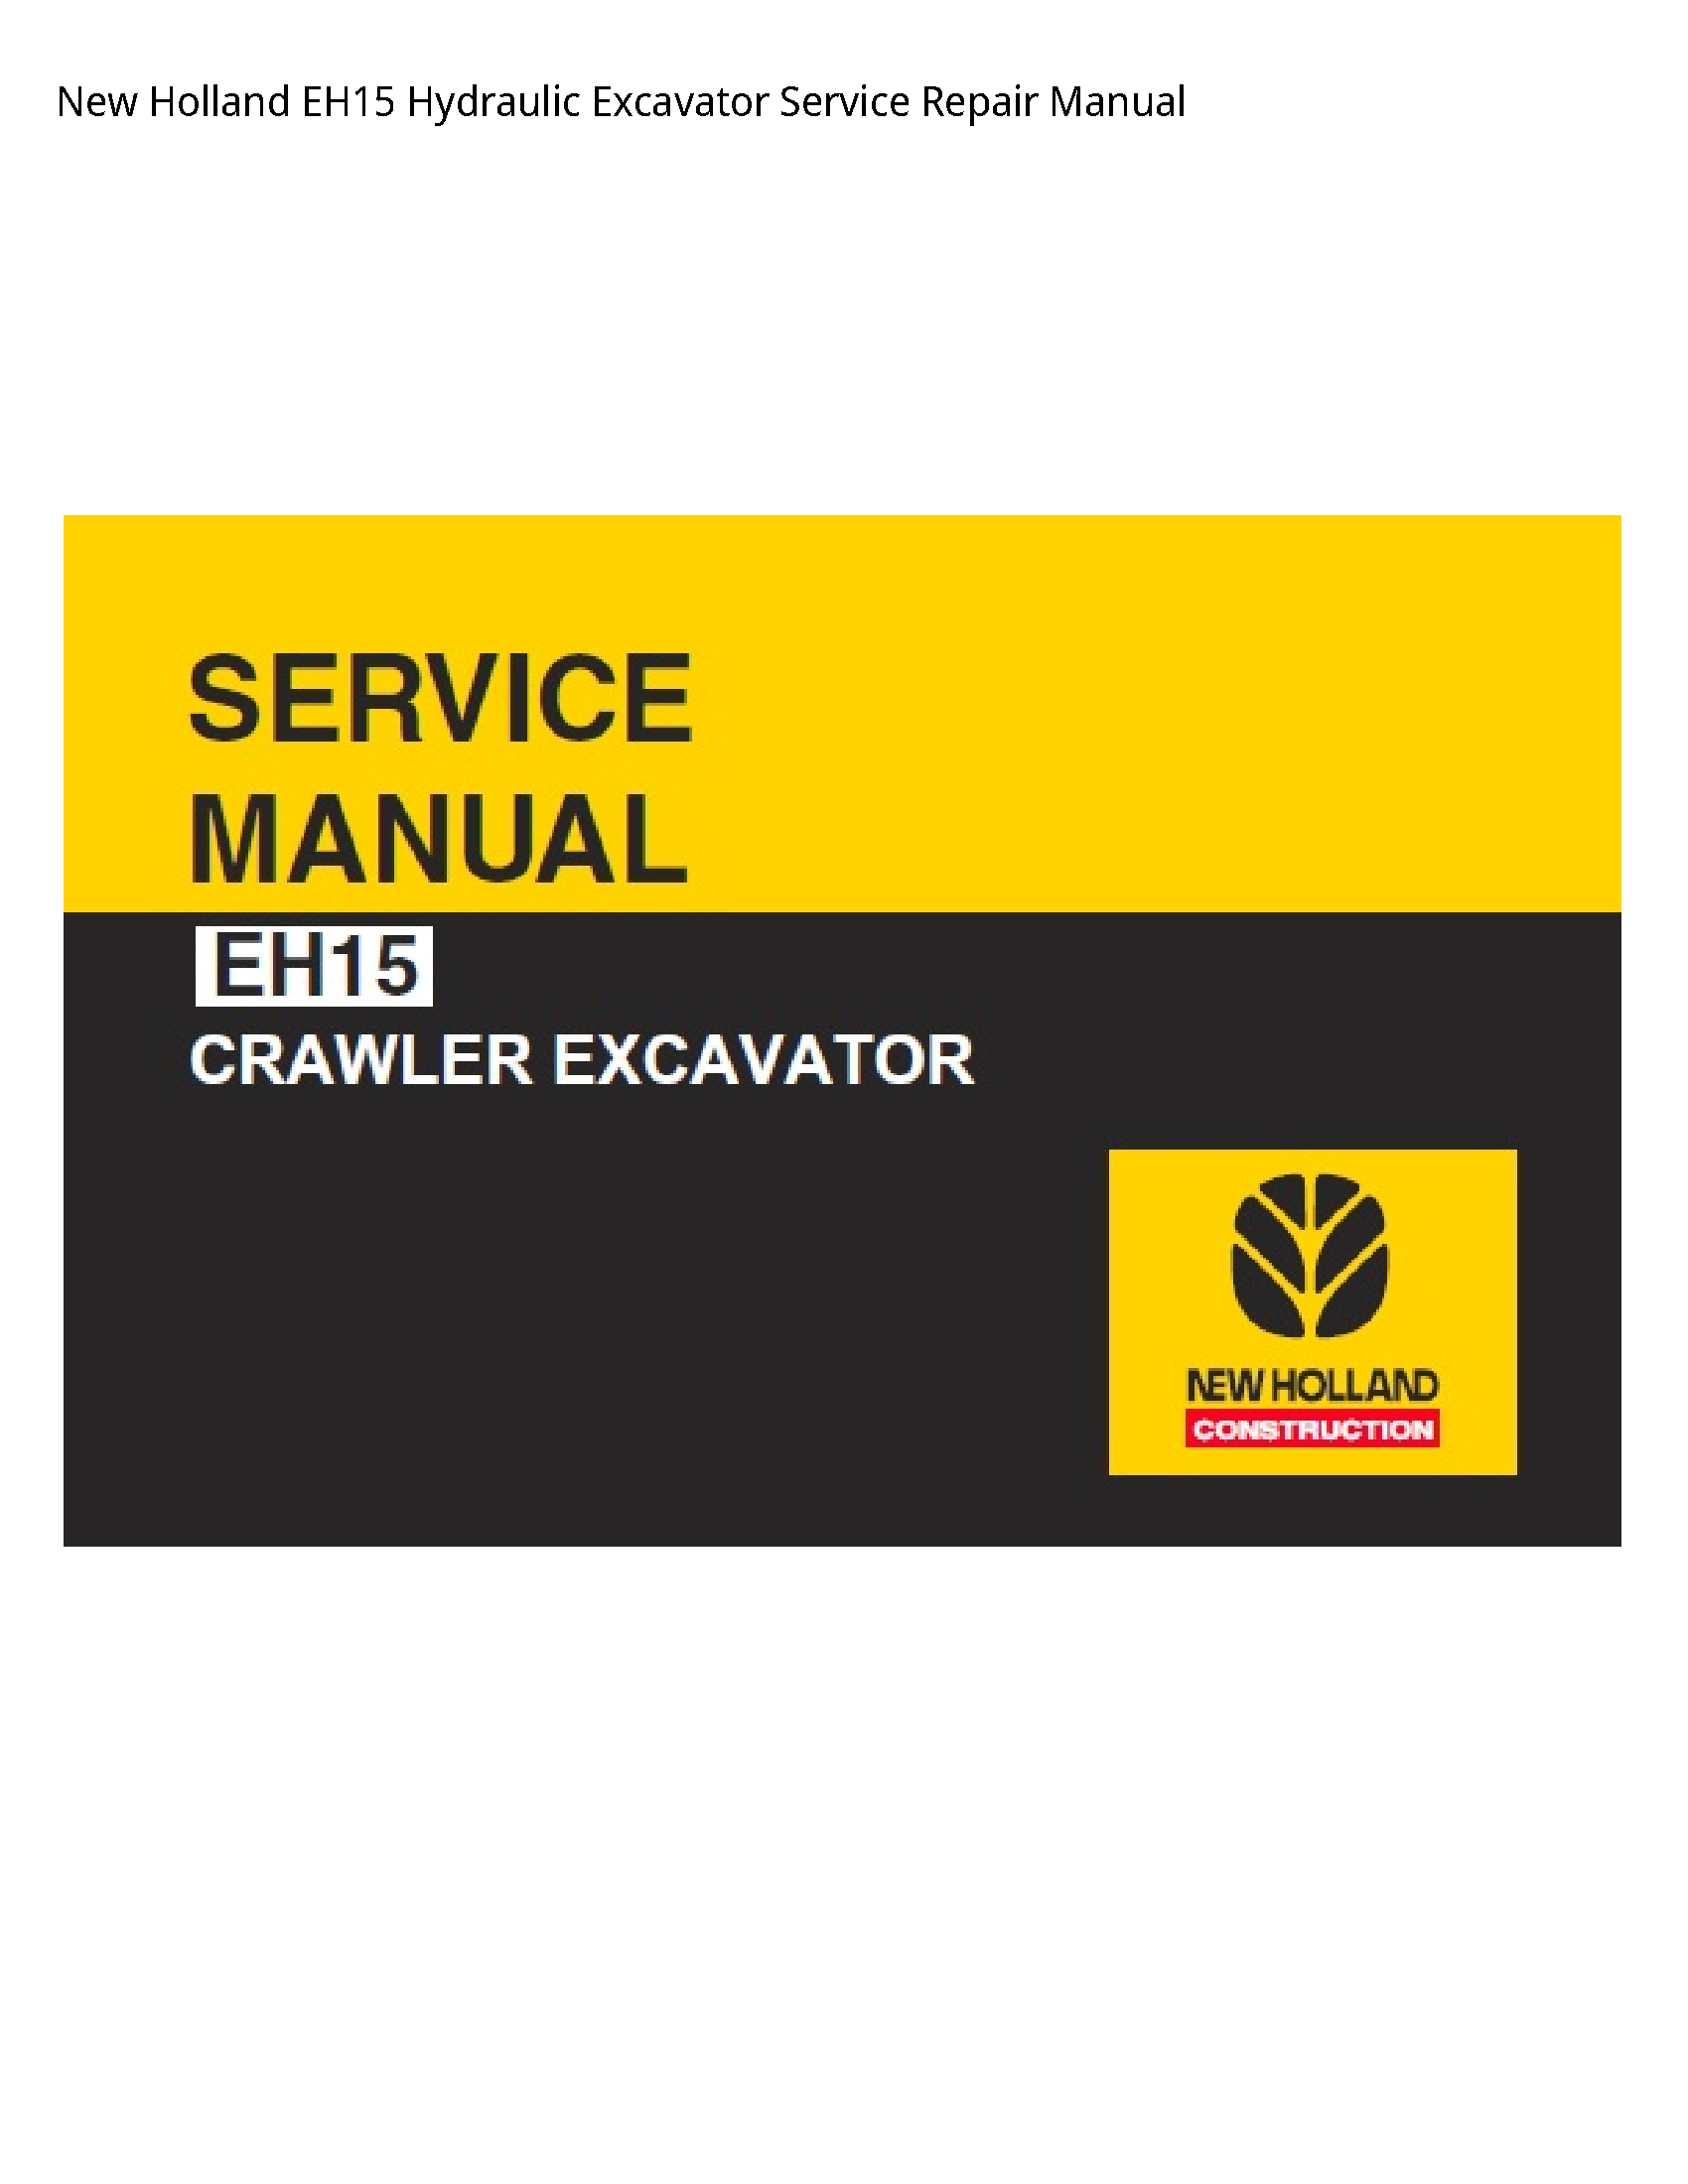 New Holland EH15 Hydraulic Excavator manual